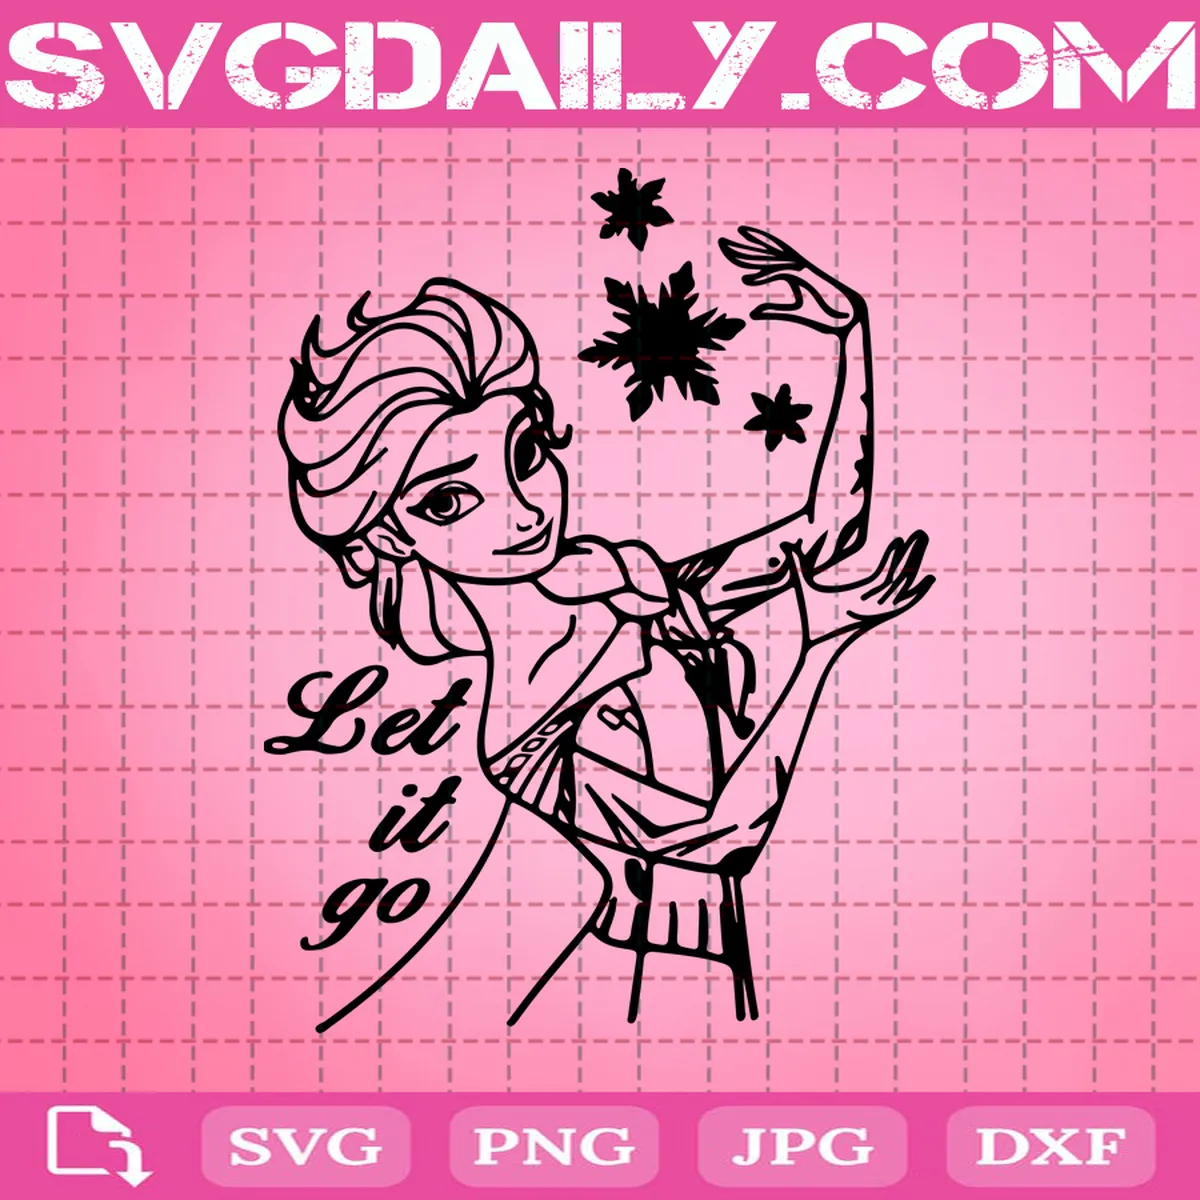 Elsa Let It Go Svg - Daily Free Premium Svg Files